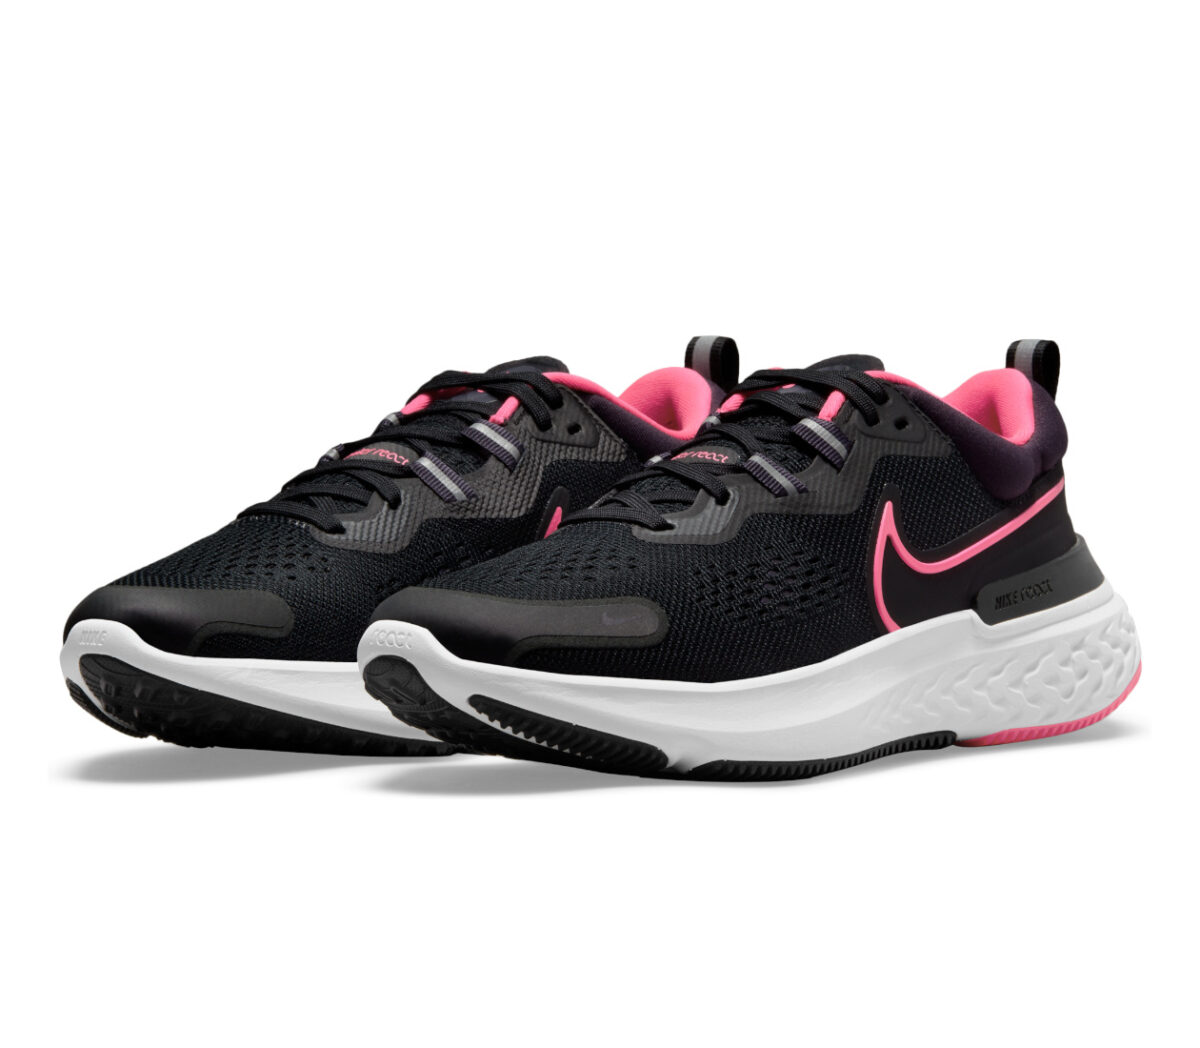 coppia scarpa da running nike react miler donna nera e rosa